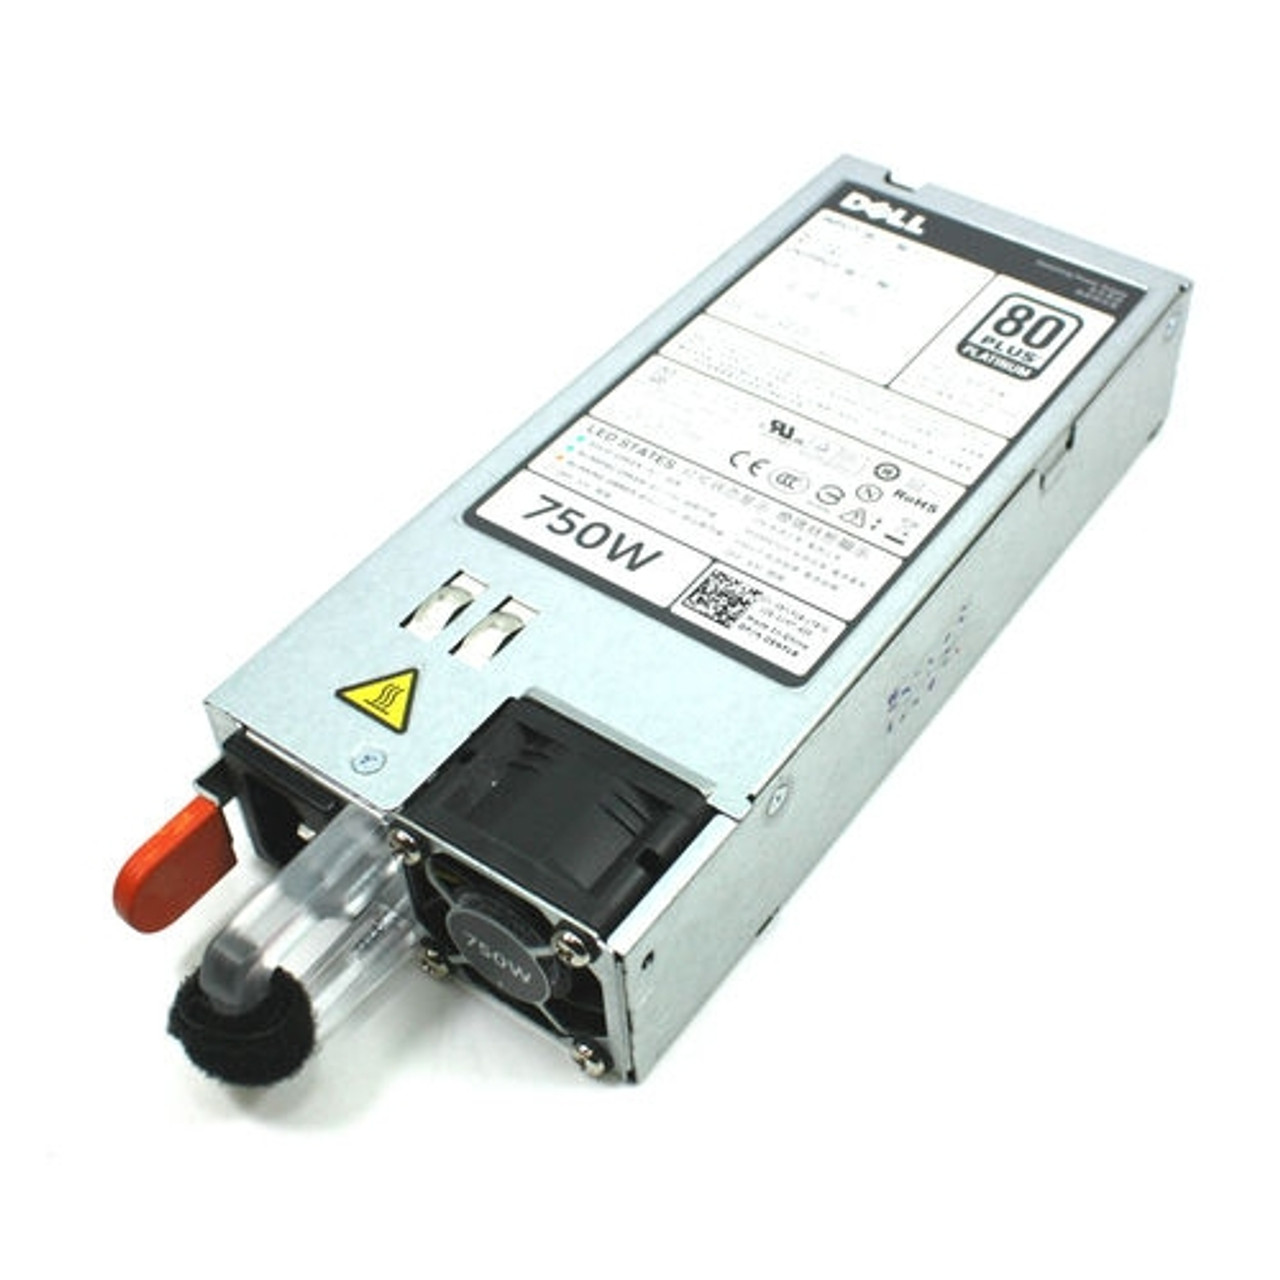 DELL 027F3G 750 Watt Redundant Power Supply For Poweredge R820 R720 R720 Xd